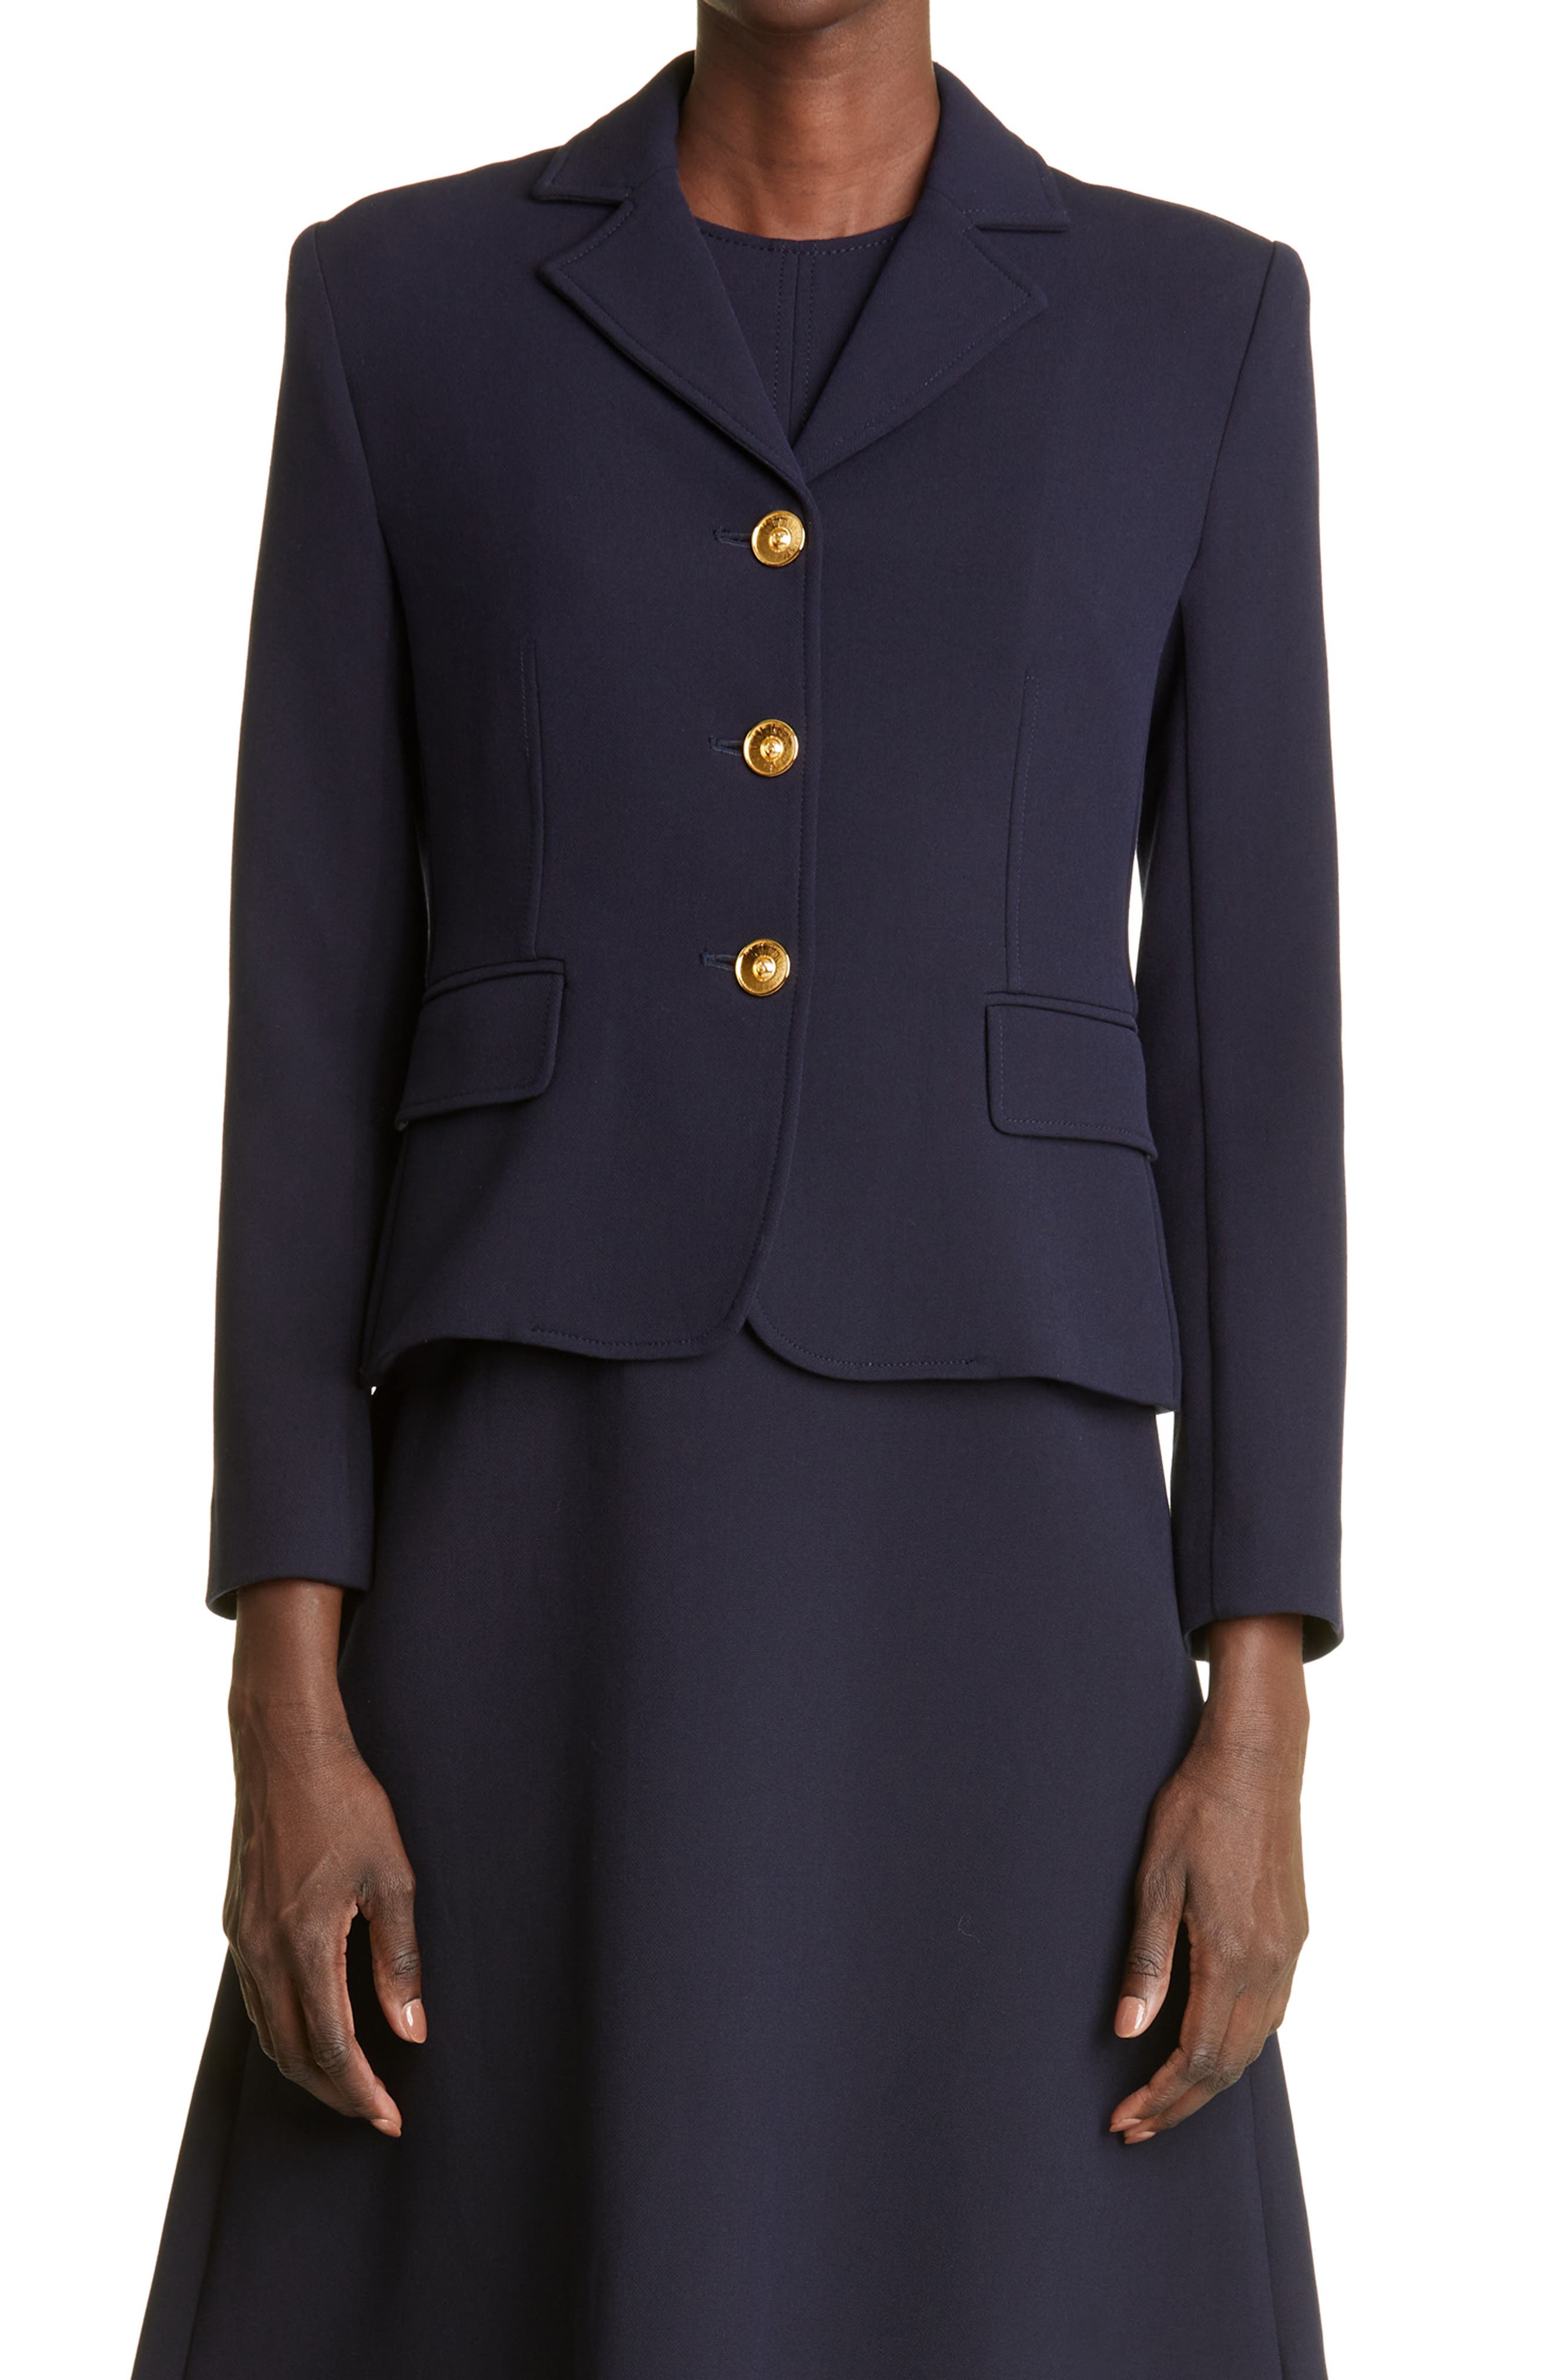 New Women Ladies Fashion Elegant Full Sleeve Sport Suit 2 PC Print Long ompers 